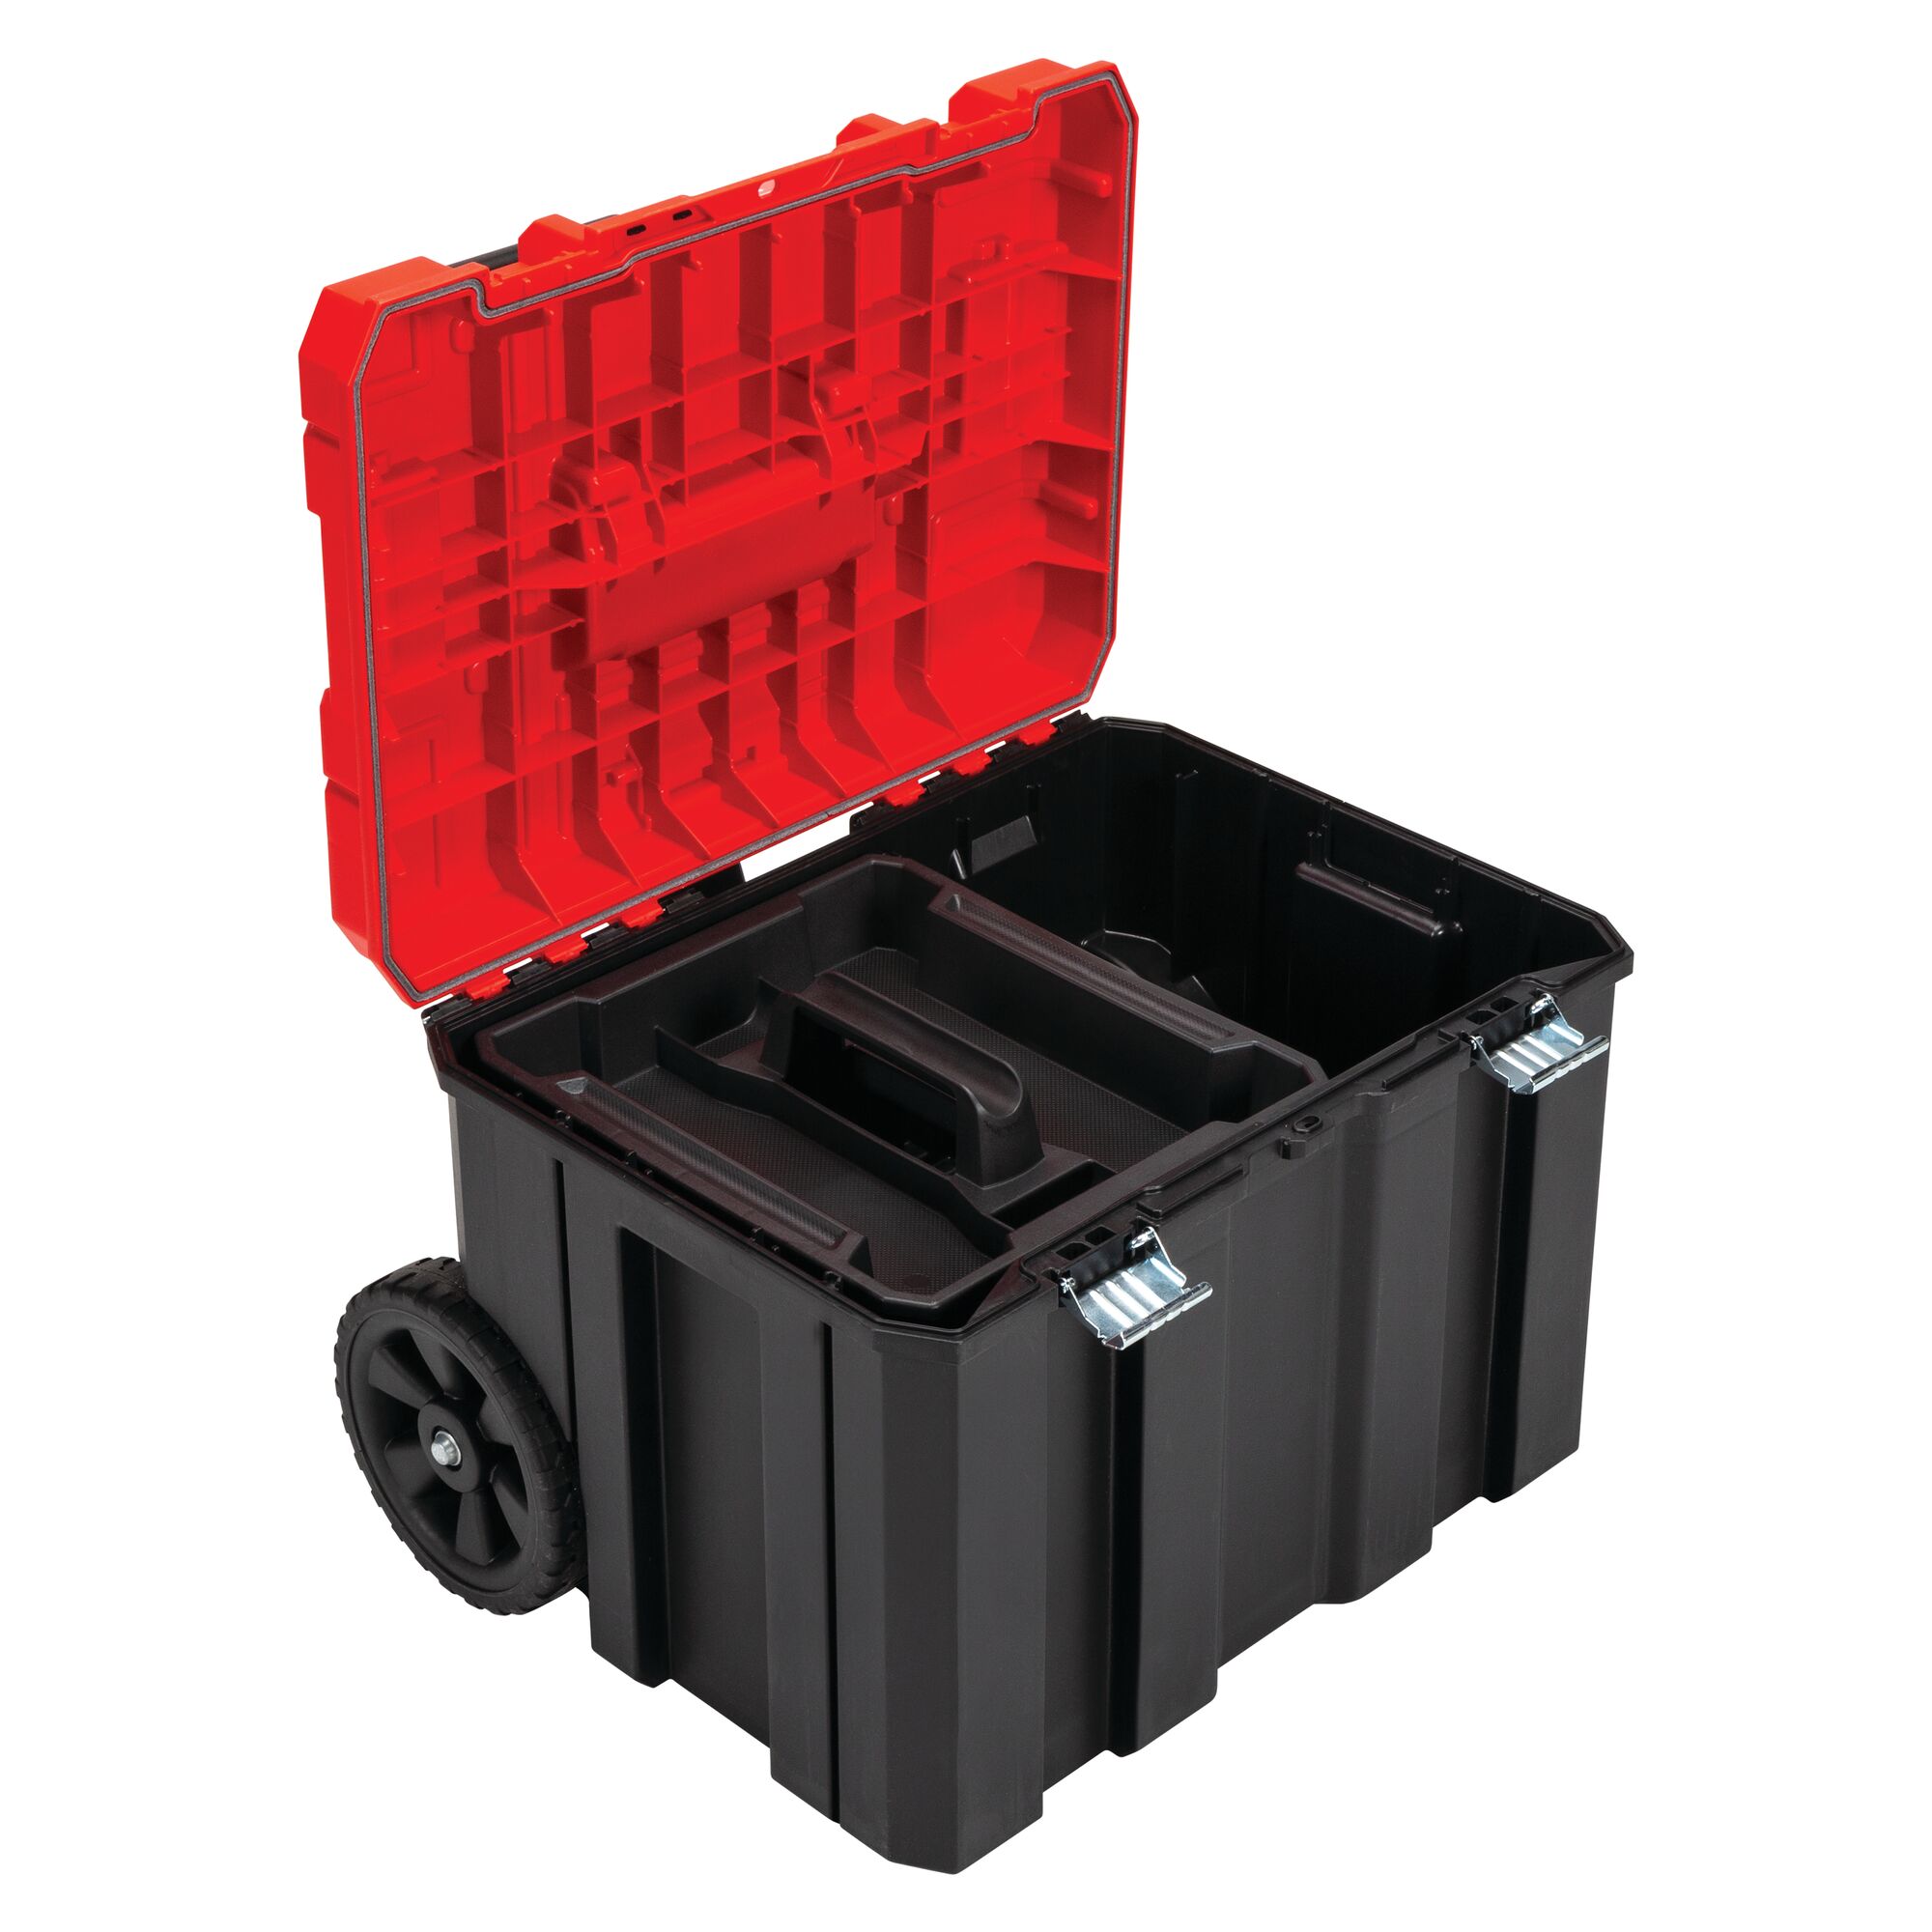 Large volume storage of Versastack system 20 inch red plastic wheeled lockable tool box.